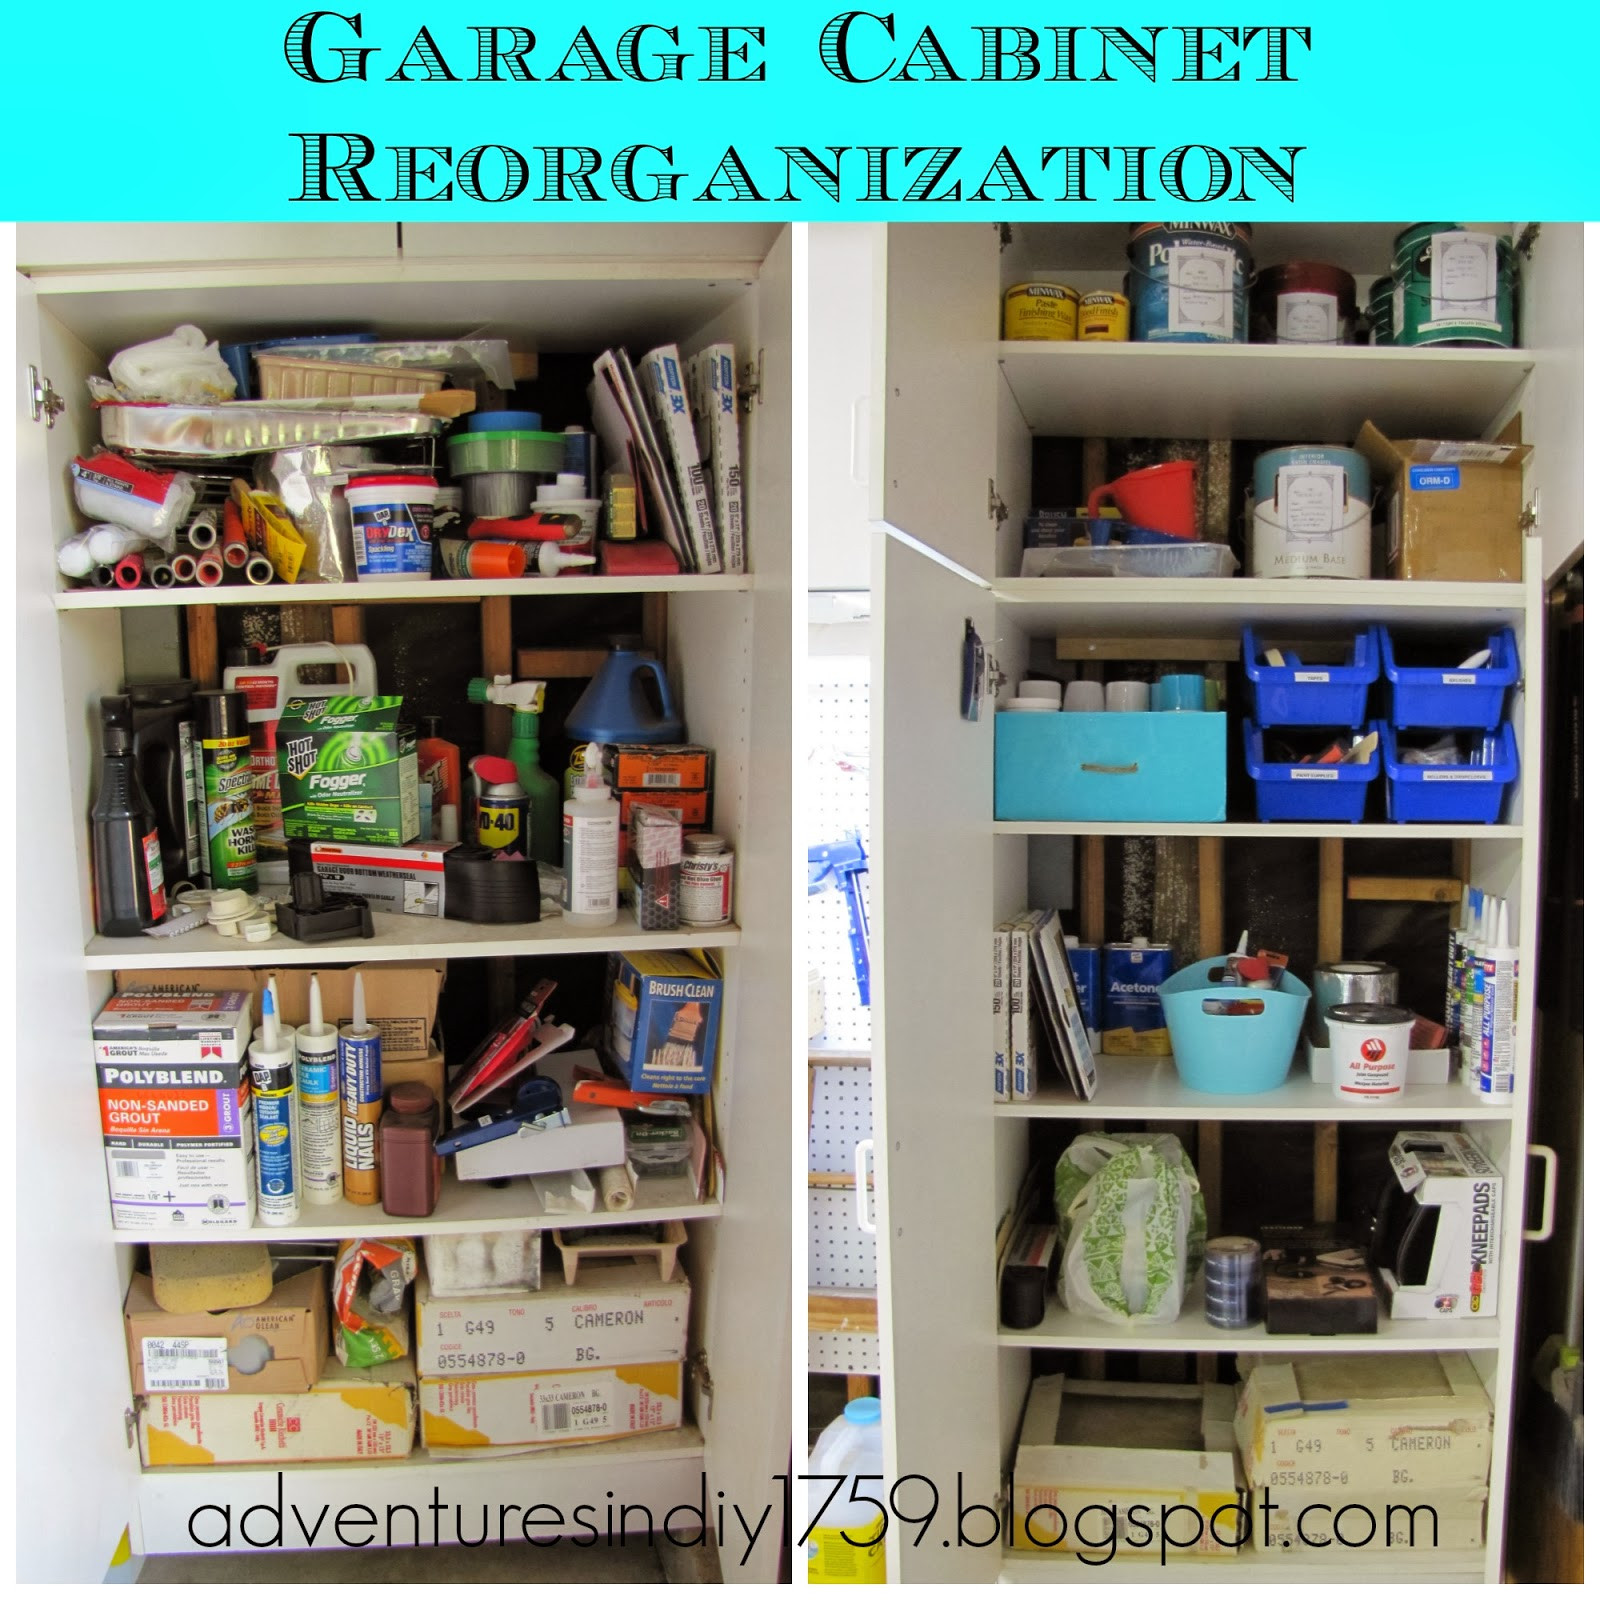 Garage Organizing Cabinets
 Adventures in DIY Garage Organization Inside the Cabinets